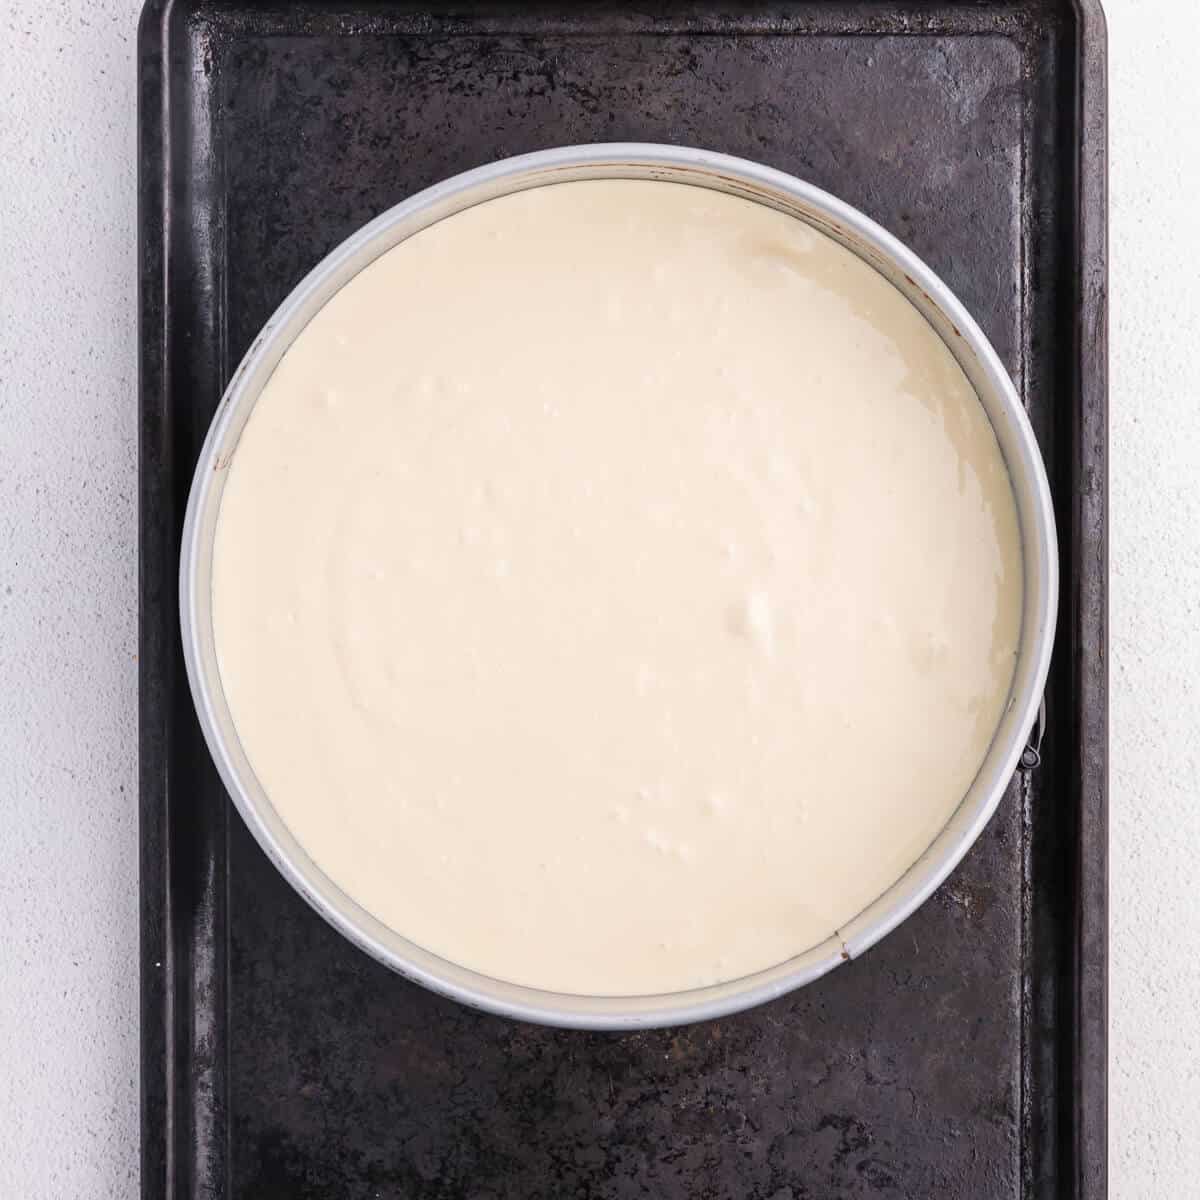 cheesecake mixture in the springform pan